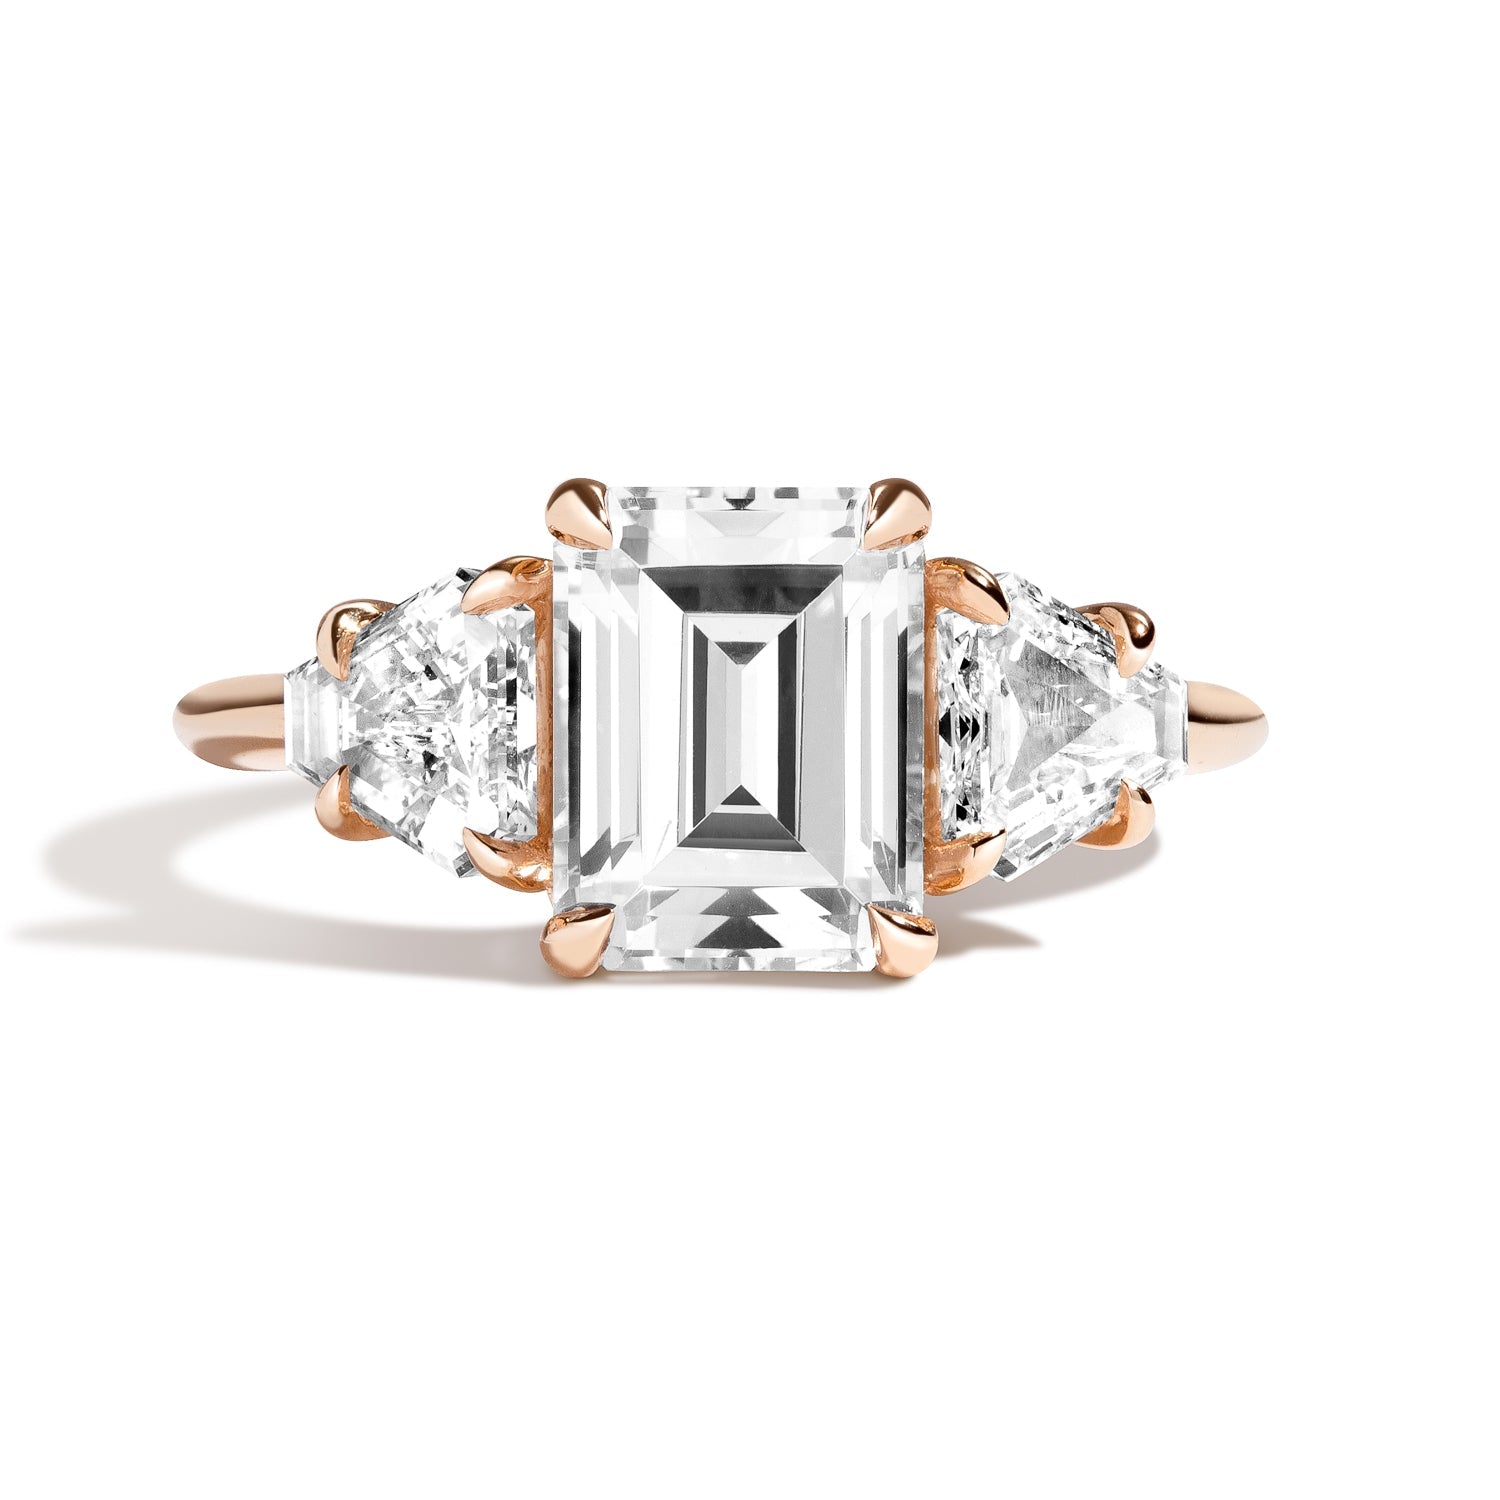 Shahla Karimi Jewelry 3-Stone Emerald + Cut-Corner Triangle Ring in 14K Rose Gold